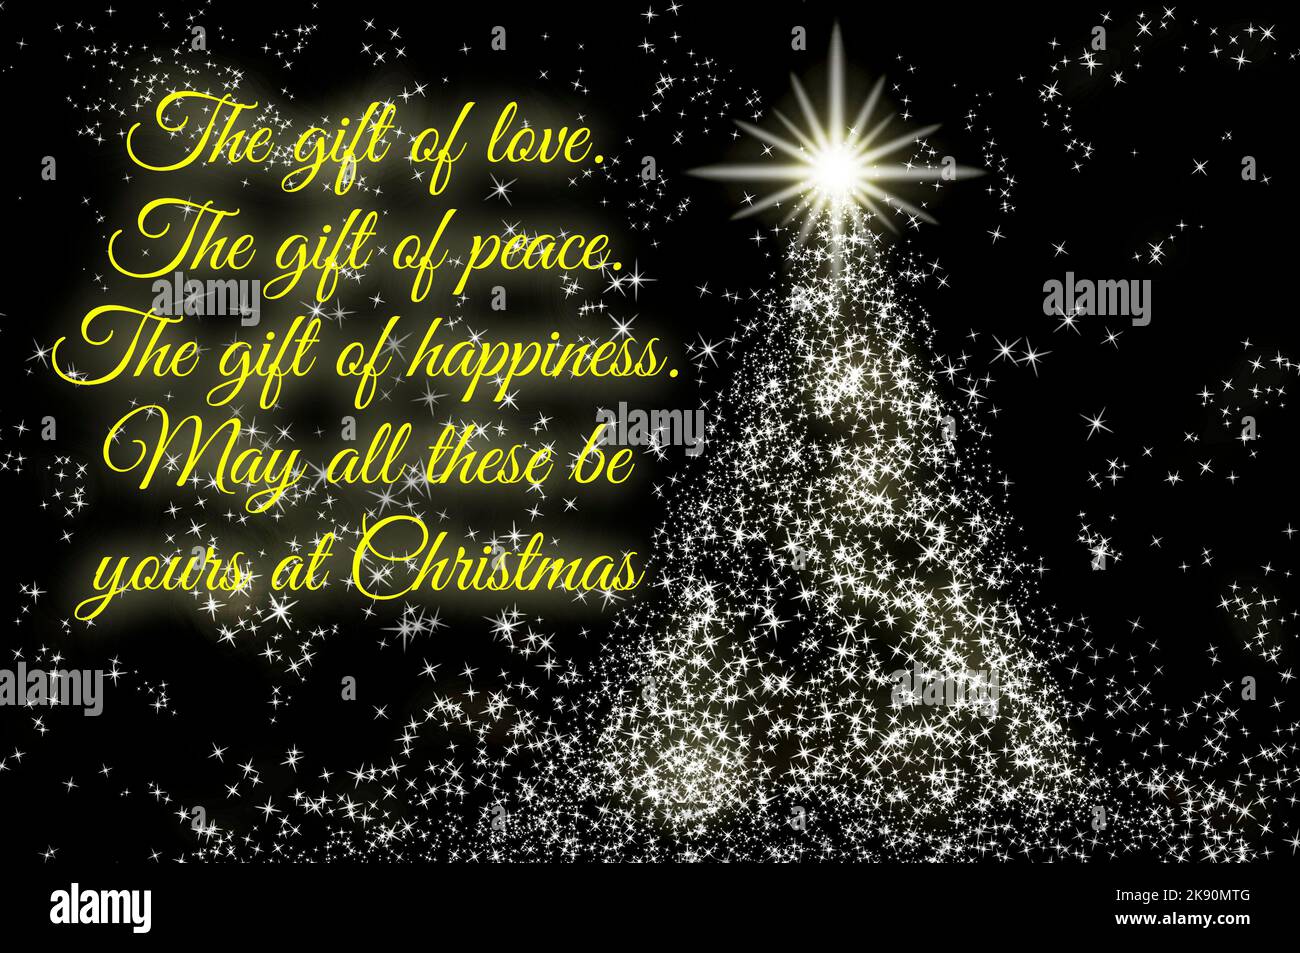 Christmas wishes text with shining stars like pine tree on dark background. Christmas celebration concept. Stock Photo